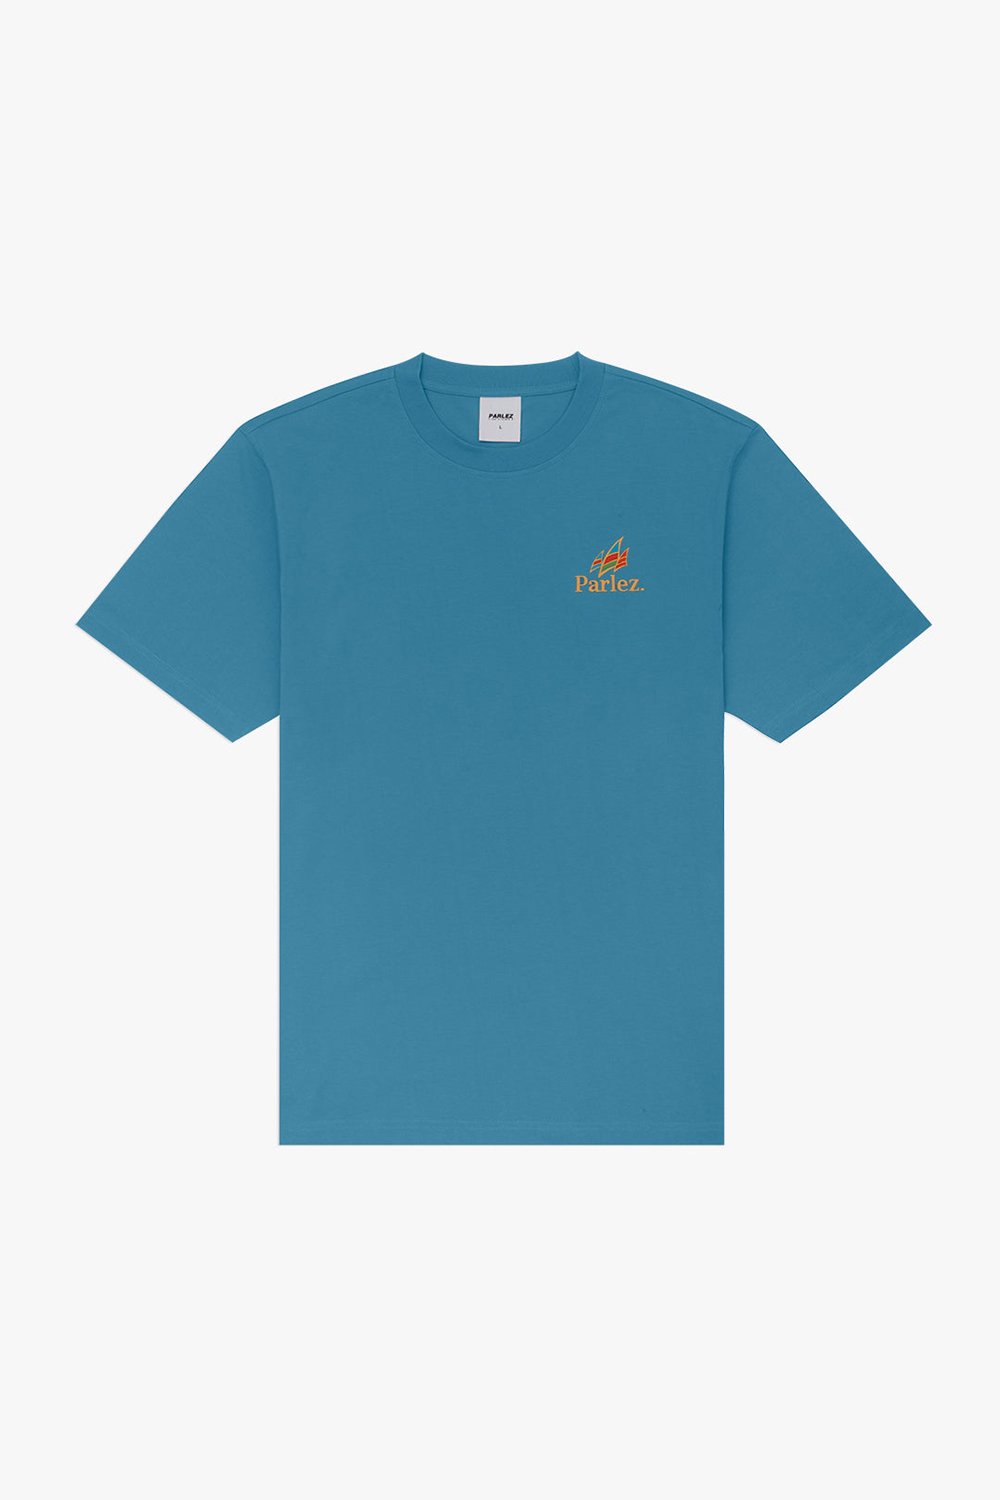 Wanstead T Shirt Dusty Blue (PRLZ-3)